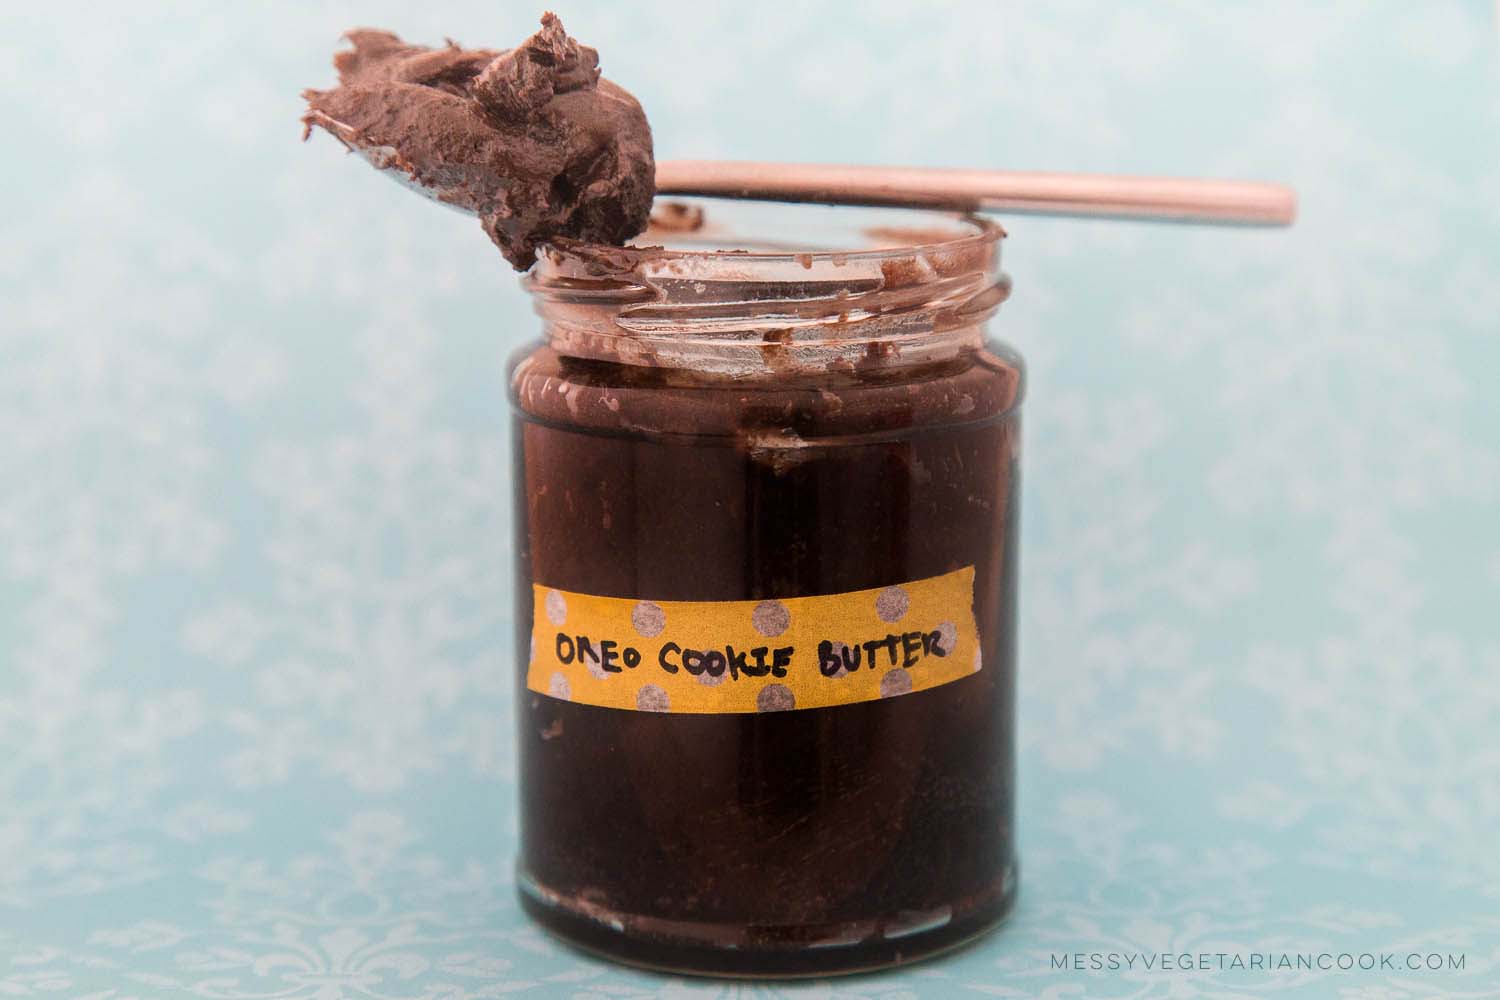 Landmark Millimeter cast Optimum 9200A Blender Review + Oreo Cookie Butter Recipe - Messy Vegan Cook